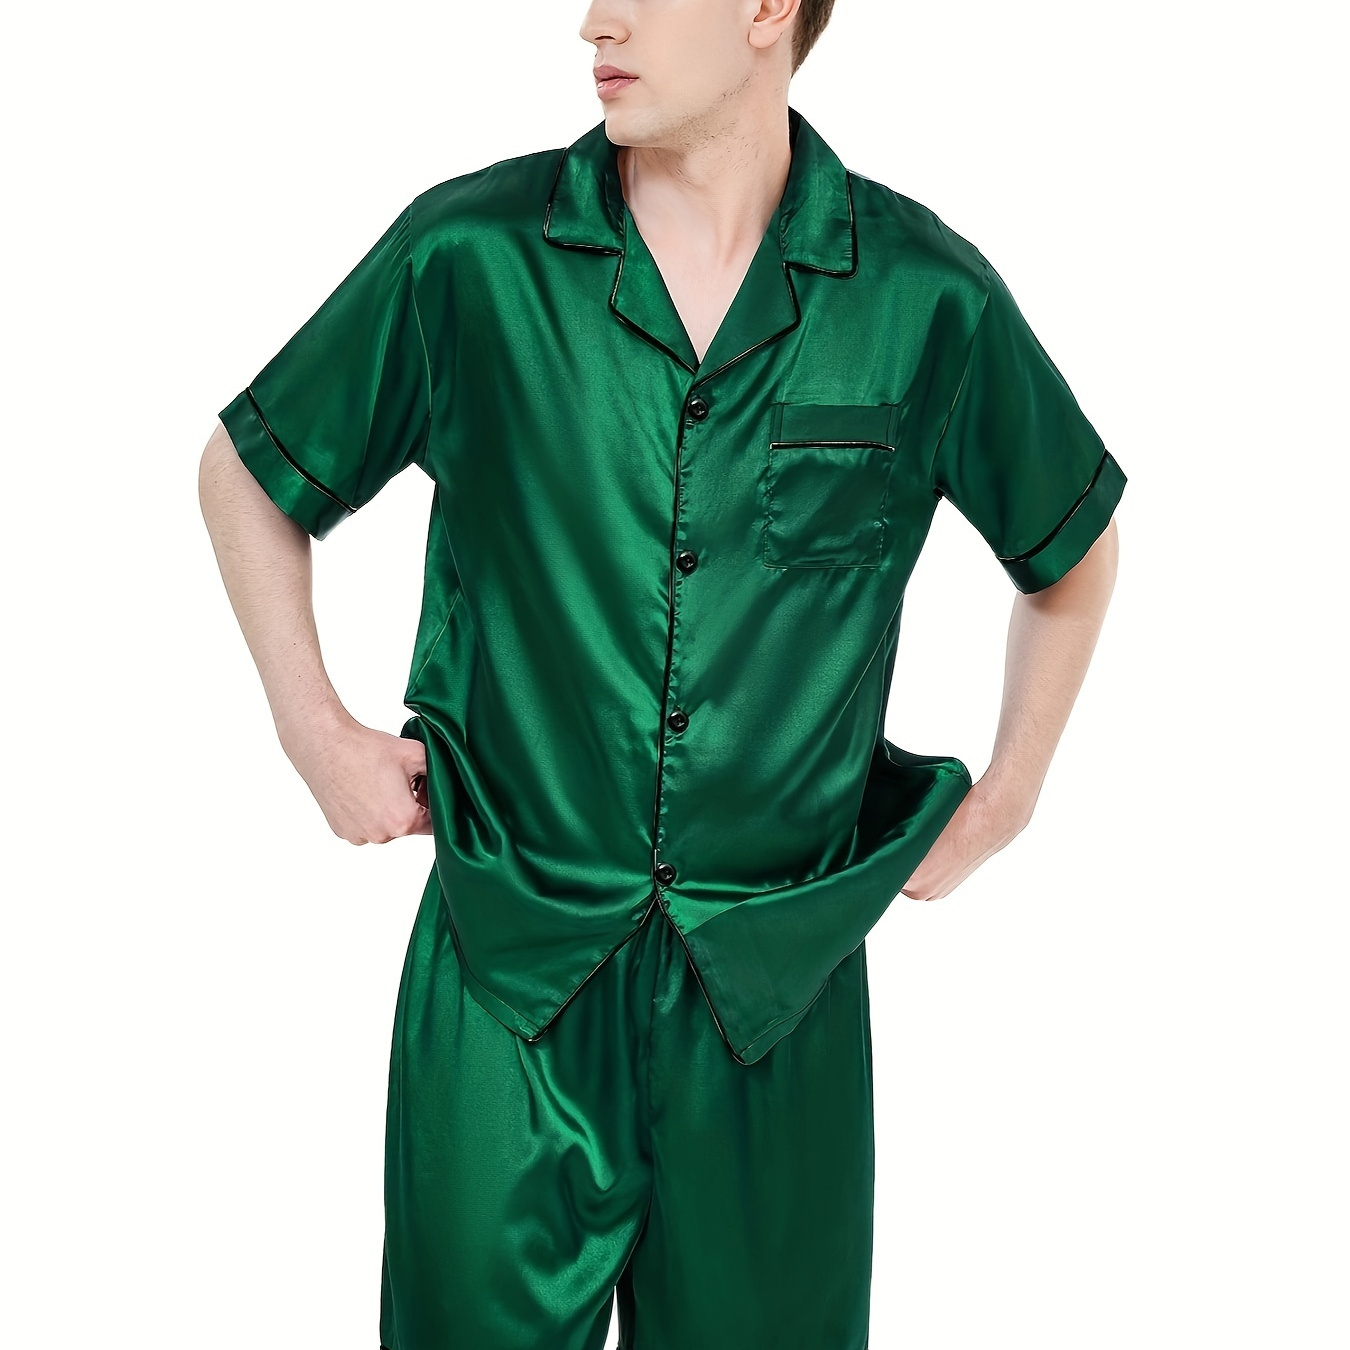 

2pcs/set Men's Ice Silk Pajamas Set For Summer, Green Short Sleeve Button Down Shirt Top & Shorts, Thin Simulation Silk Cool Feeling Simple Casual Loungewear Set